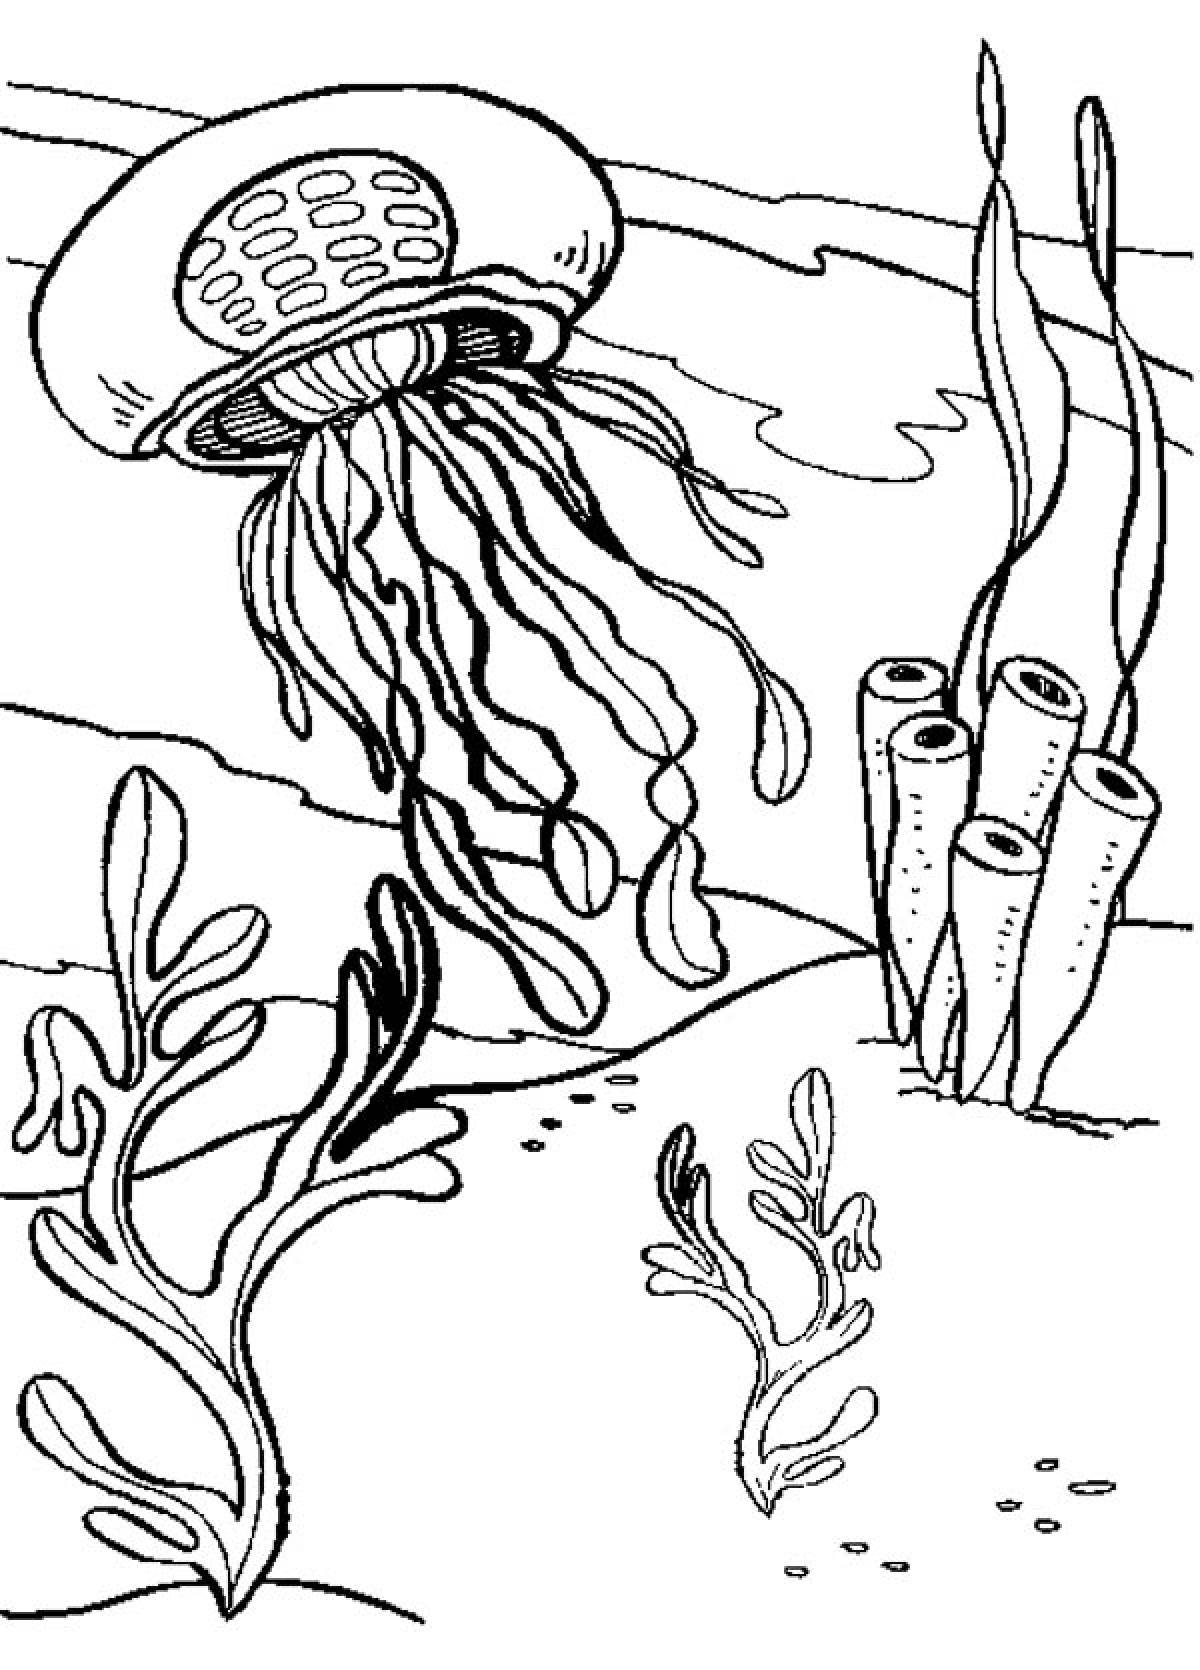 Jellyfish and seaweed